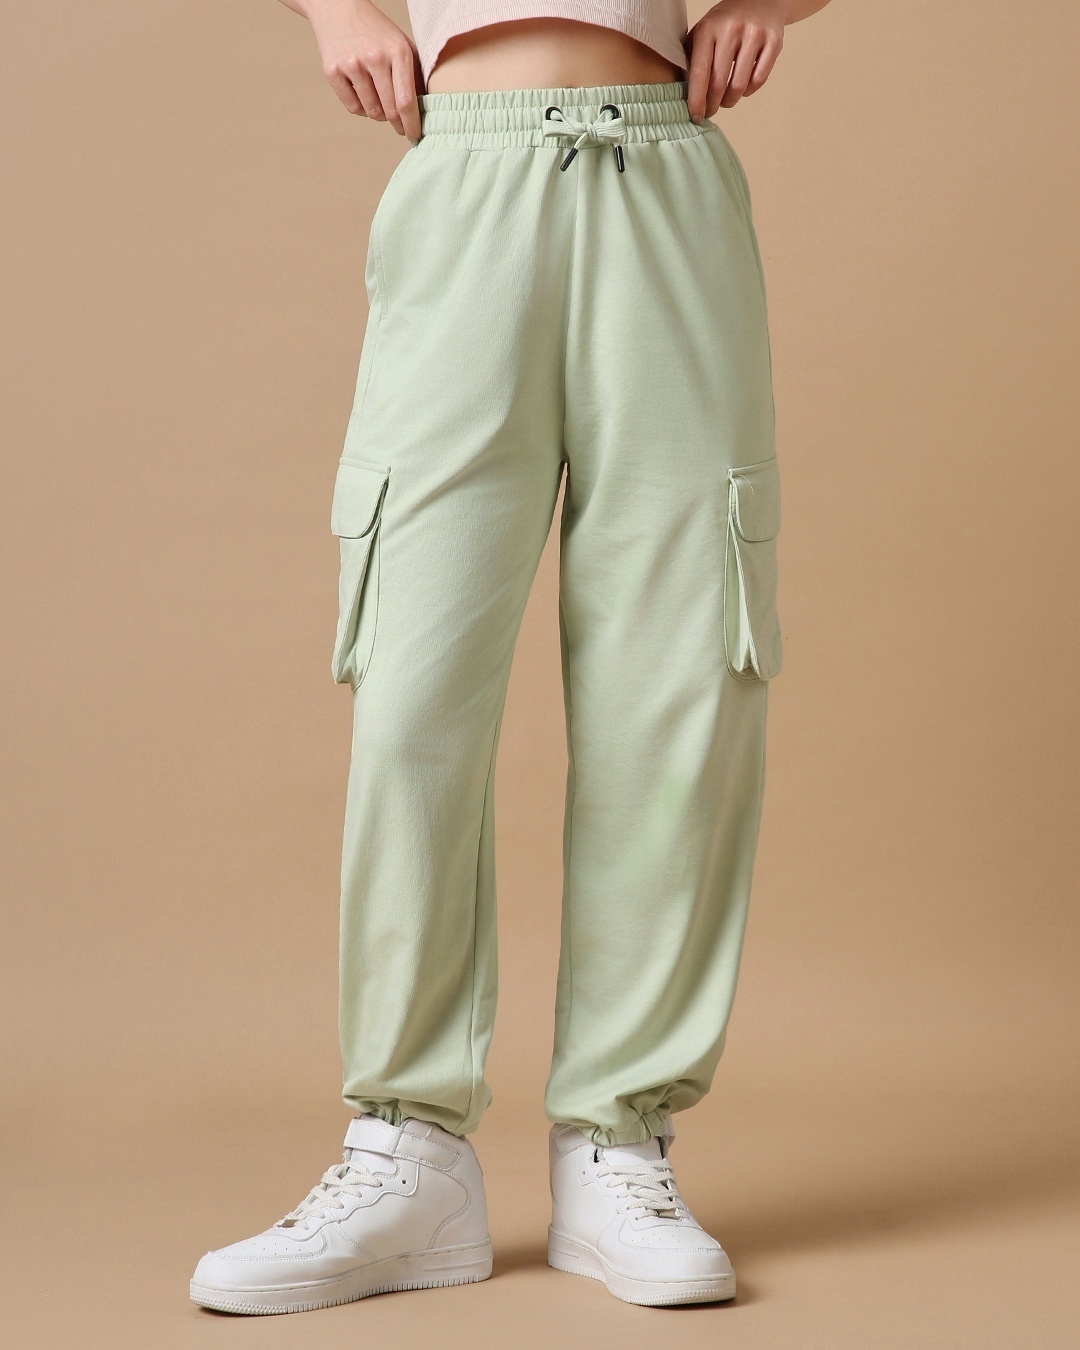 Cargo Pants for Spring 2023 | Cargo pants women outfit, Green cargo pants  outfit, Cargo pants outfit